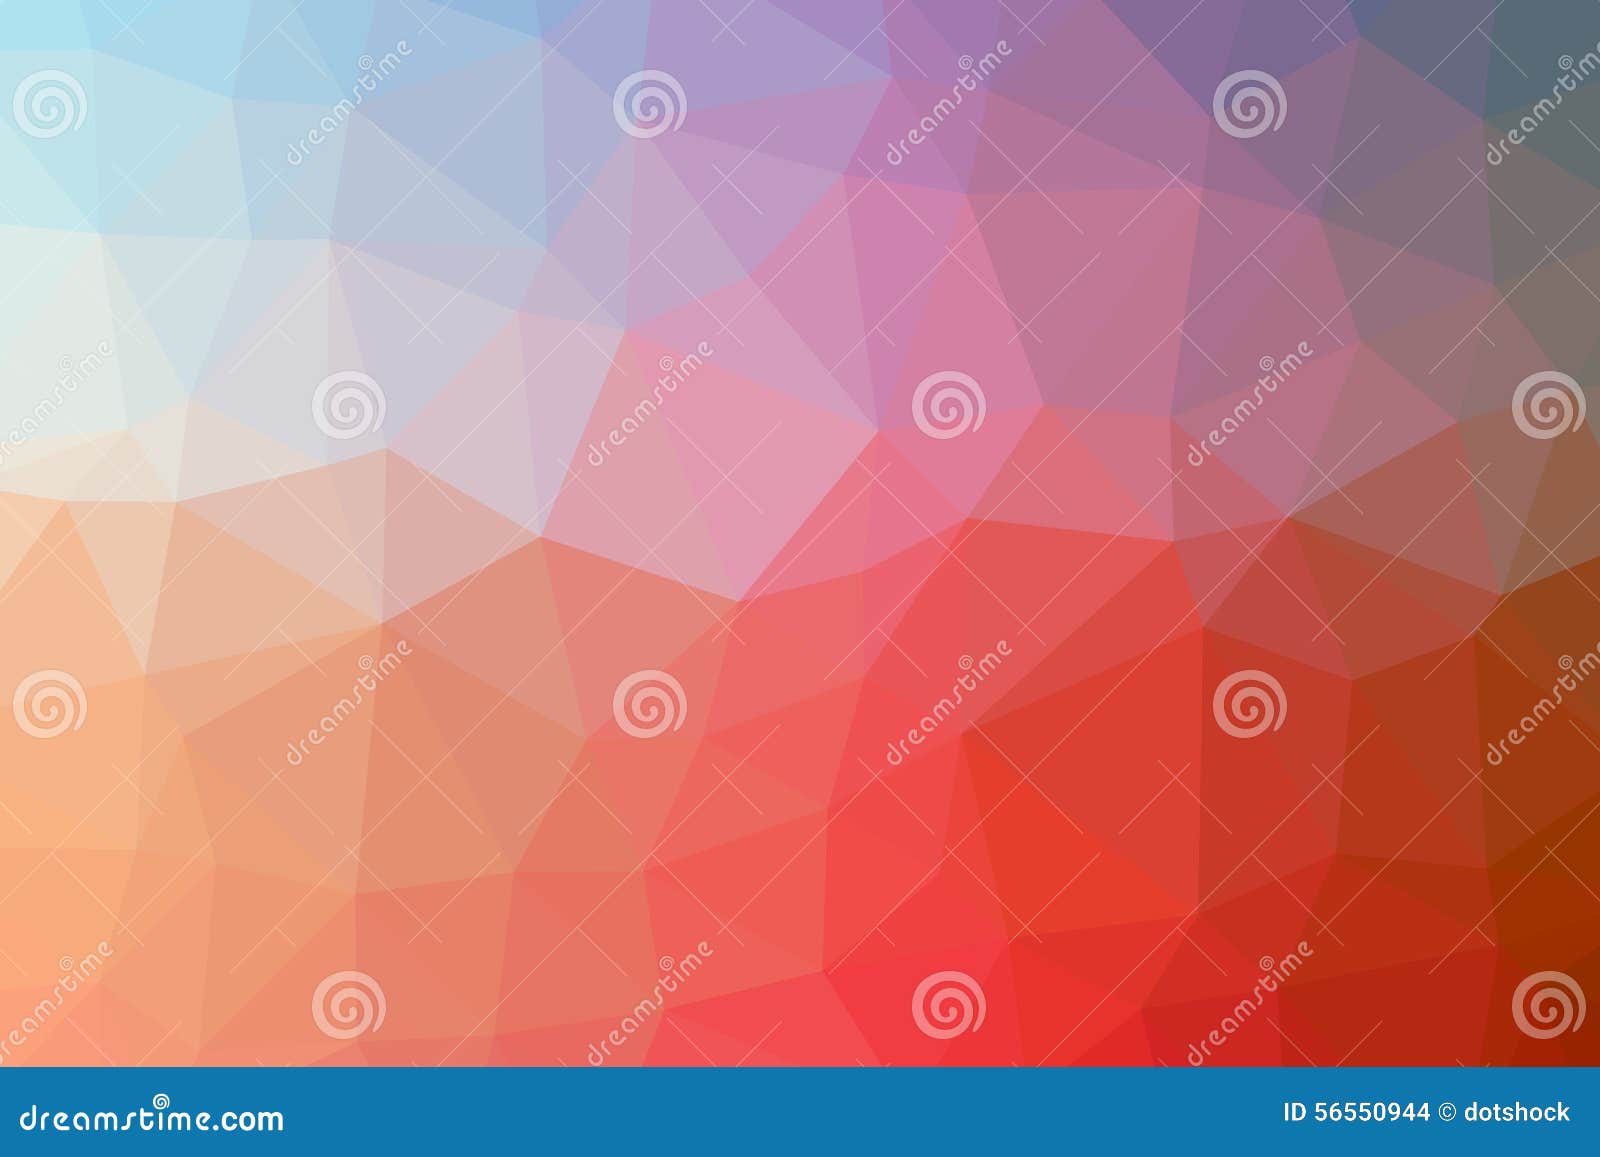 Baixo fundo poli abstrato. Baixo poli - fundo geométrico abstrato colorido com polígono triangulares